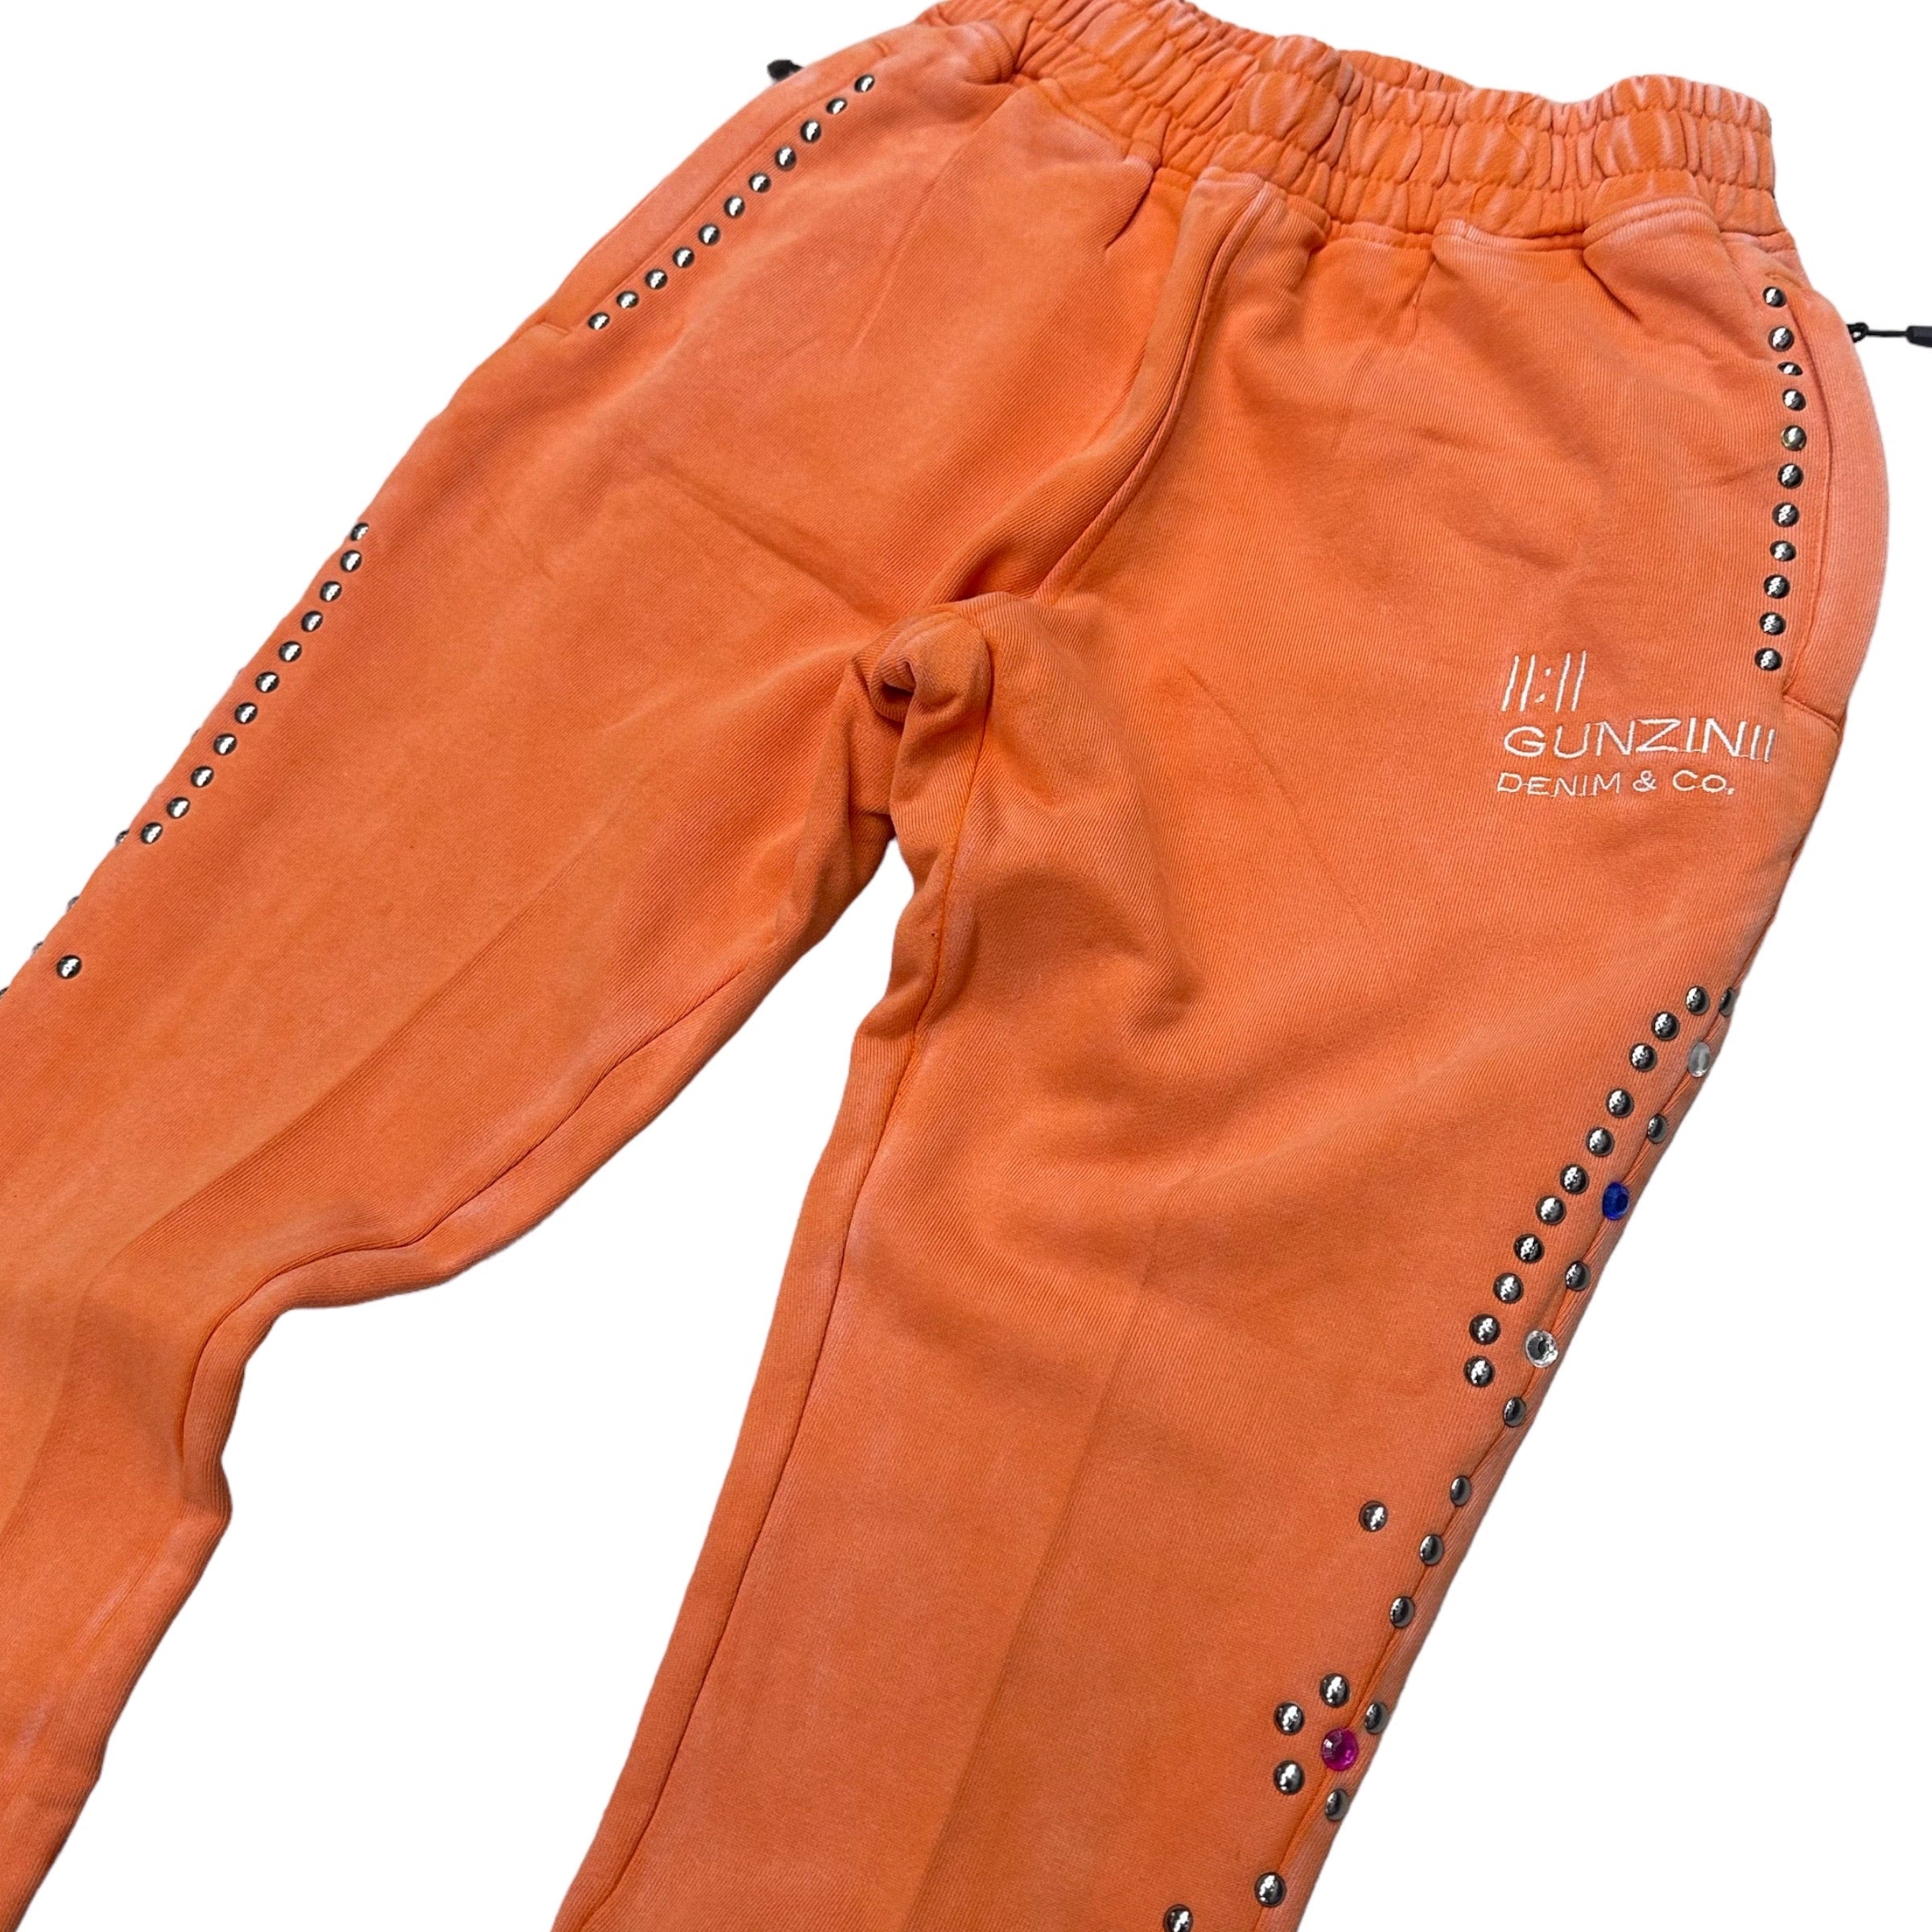 Gunzinii Stacked Premium Sweats orange